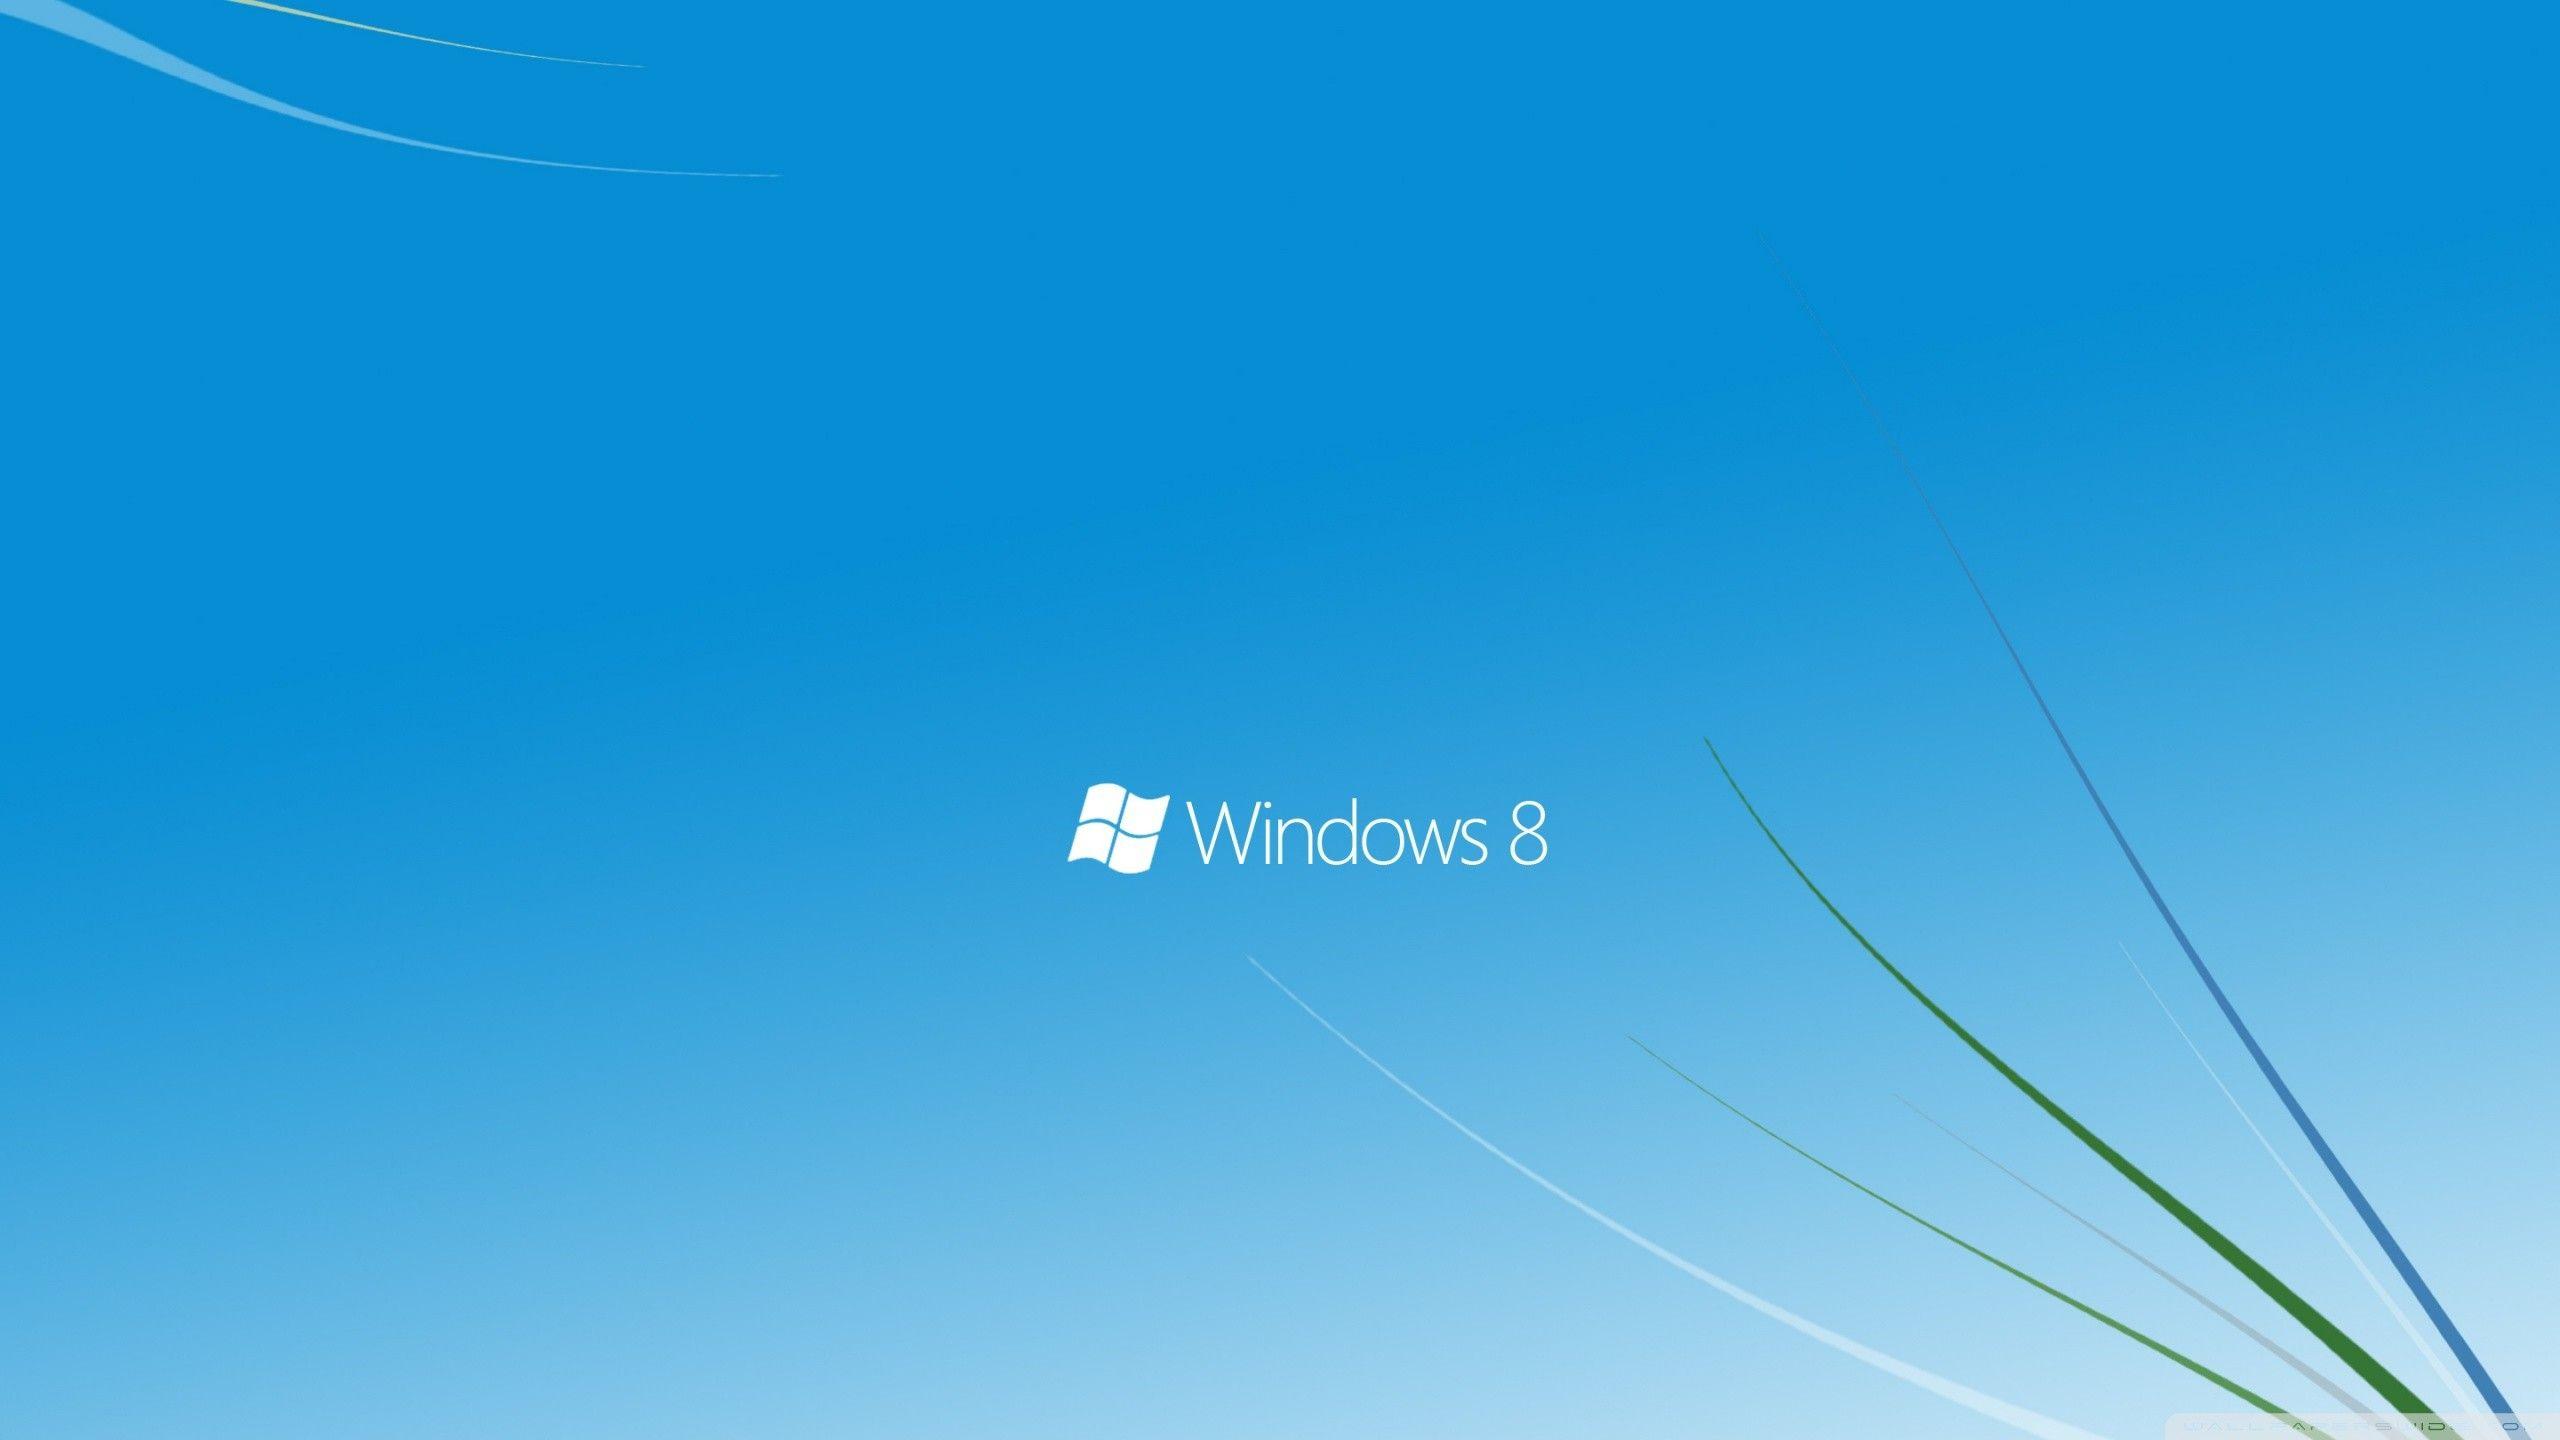 Windows 8 Official Logo - Windows 8 Official Wallpaper